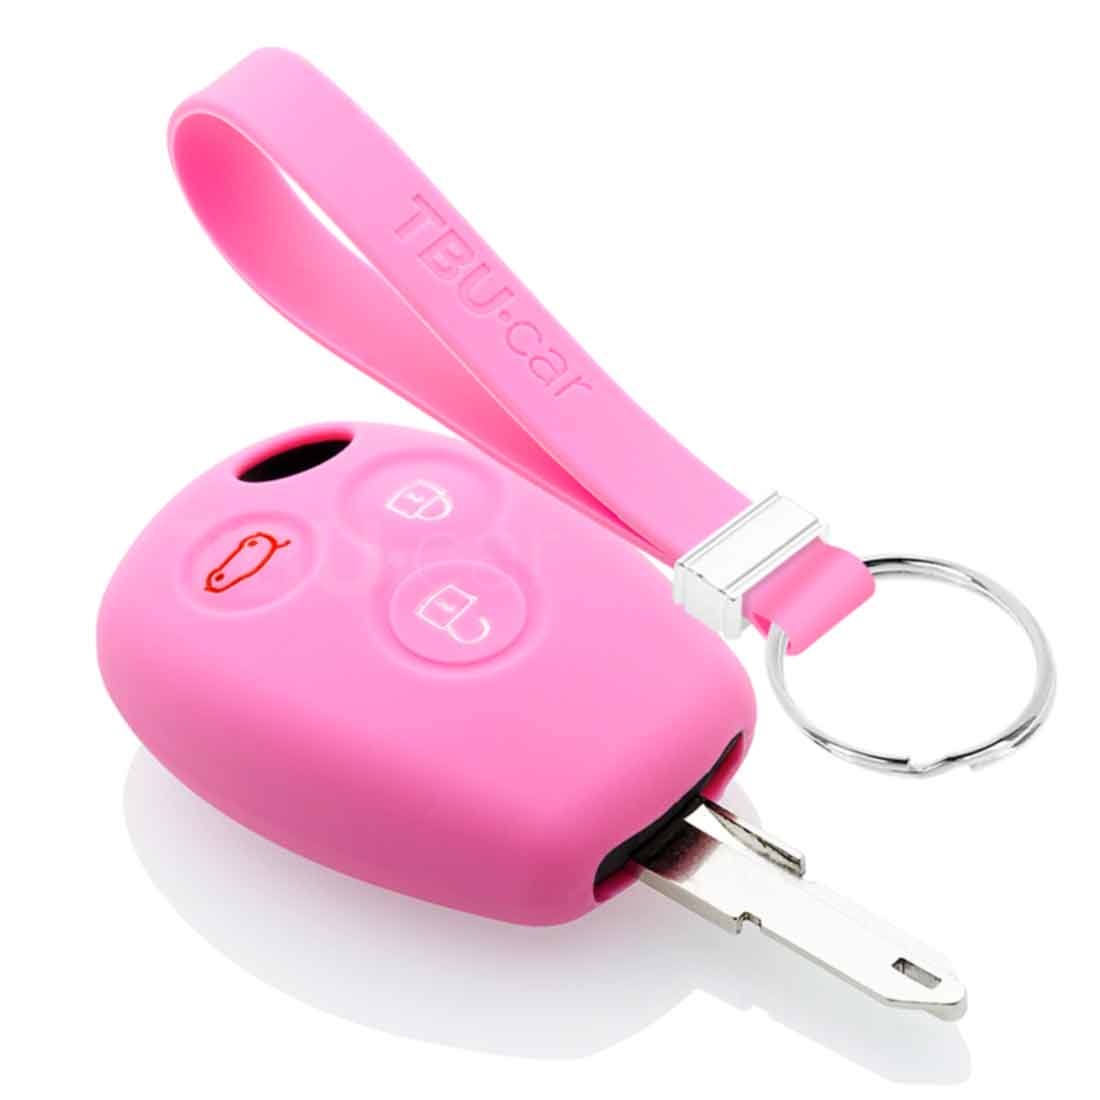 TBU car TBU car Autoschlüssel Hülle kompatibel mit Smart 3 Tasten - Schutzhülle aus Silikon - Auto Schlüsselhülle Cover in Rosa